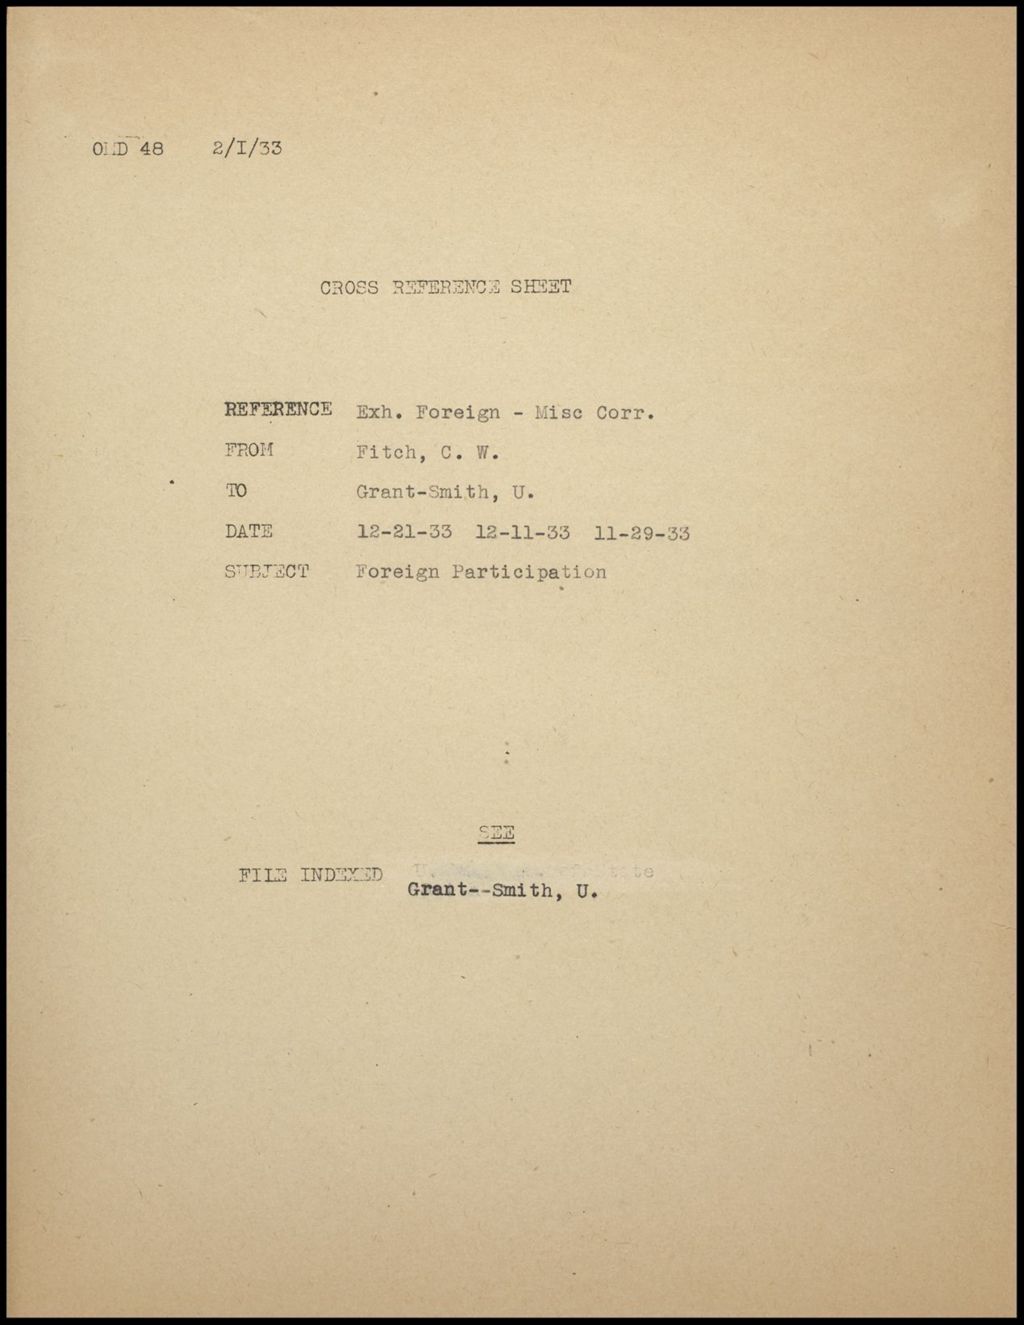 Exhibits, Foreign, Correspondence, June 1933 (Folder 11-132)